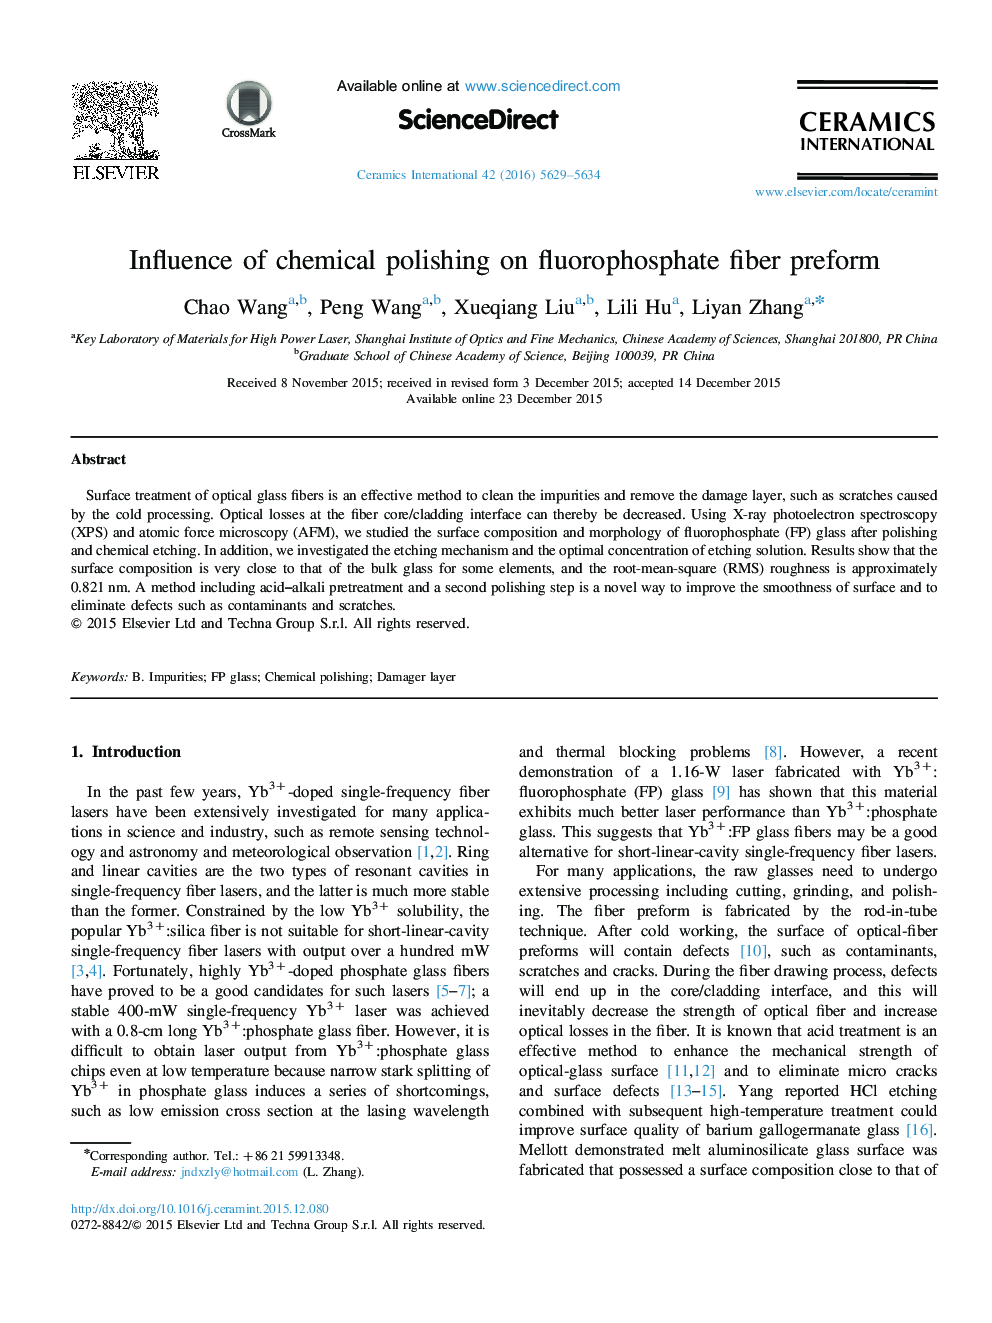 Influence of chemical polishing on fluorophosphate fiber preform